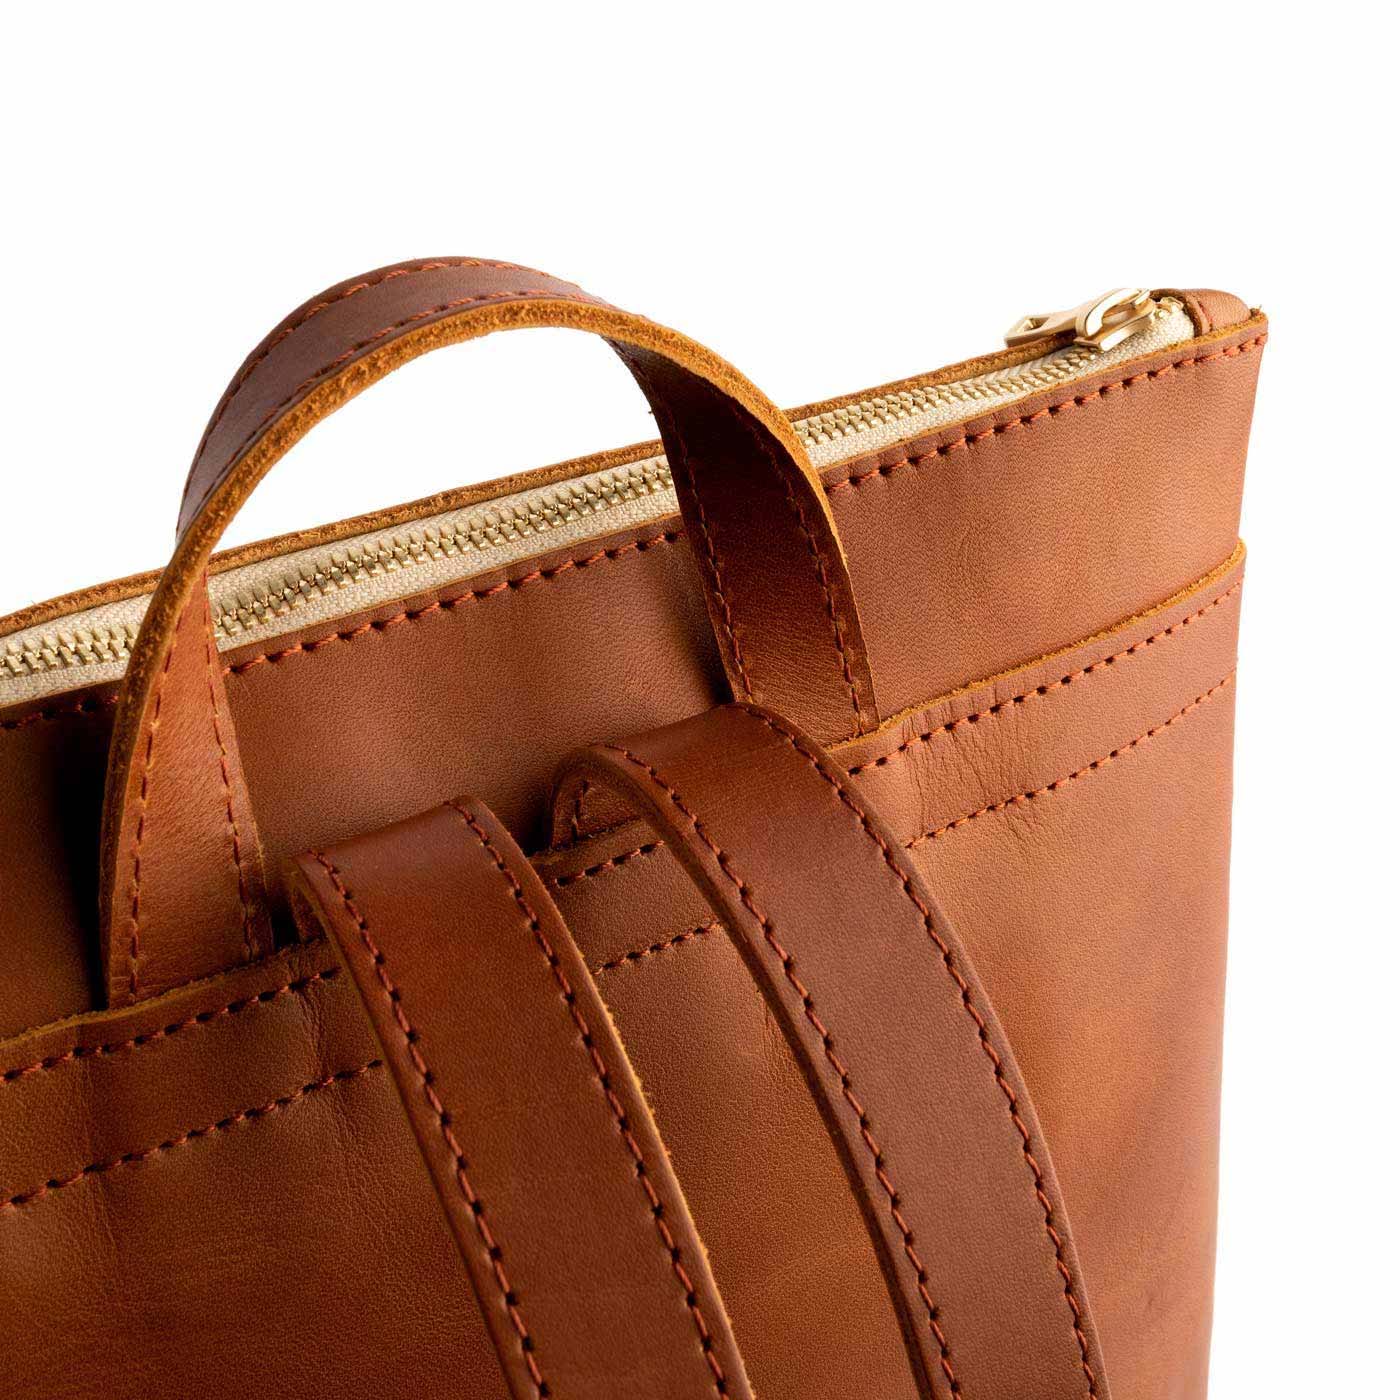 All Color: Honey | Rectangular slim leather backpack